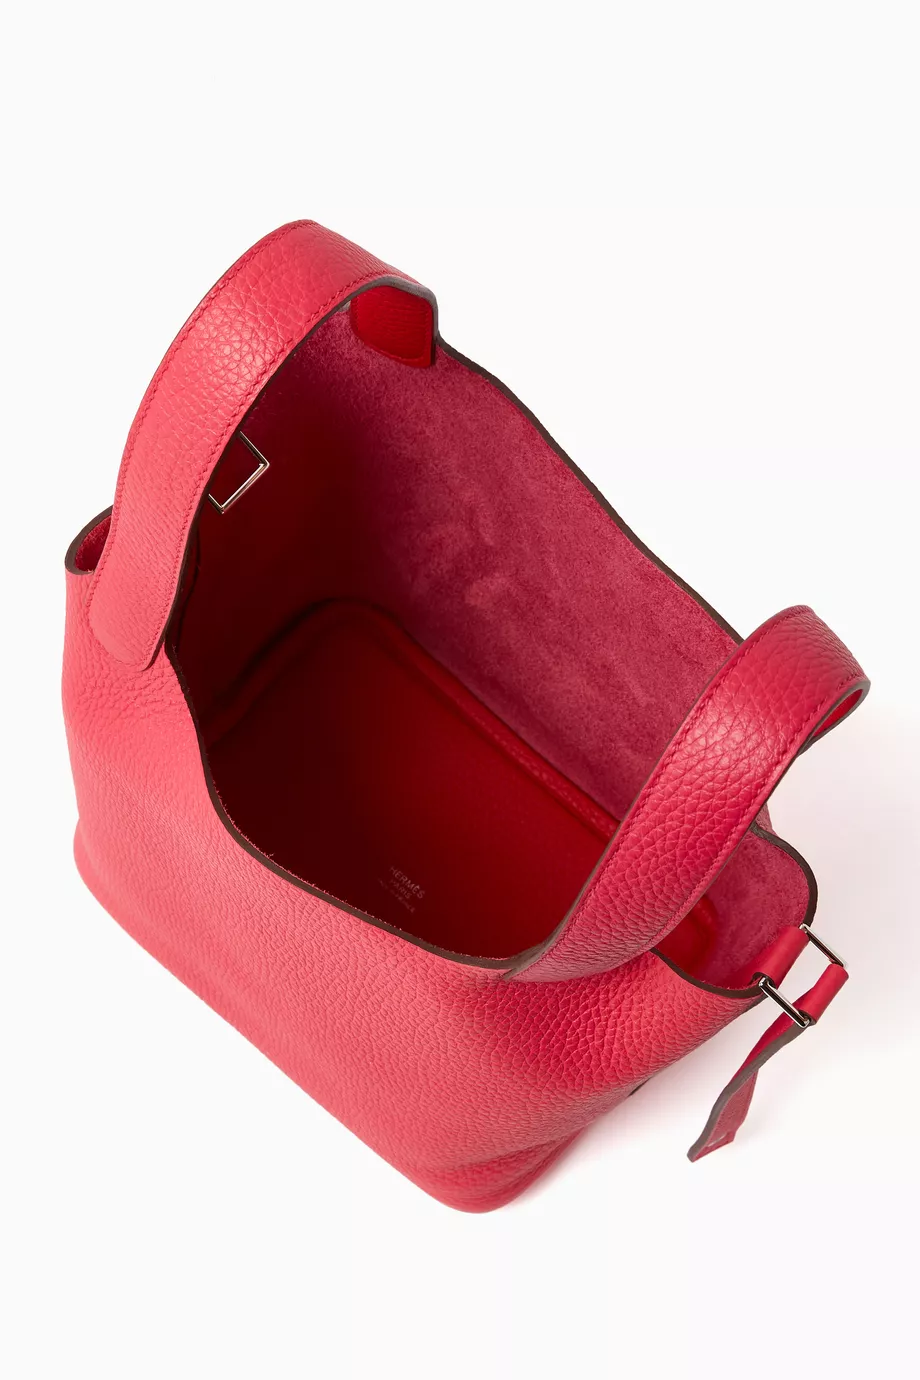 Hermès - Authenticated Picotin Handbag - Alligator Navy for Women, Never Worn